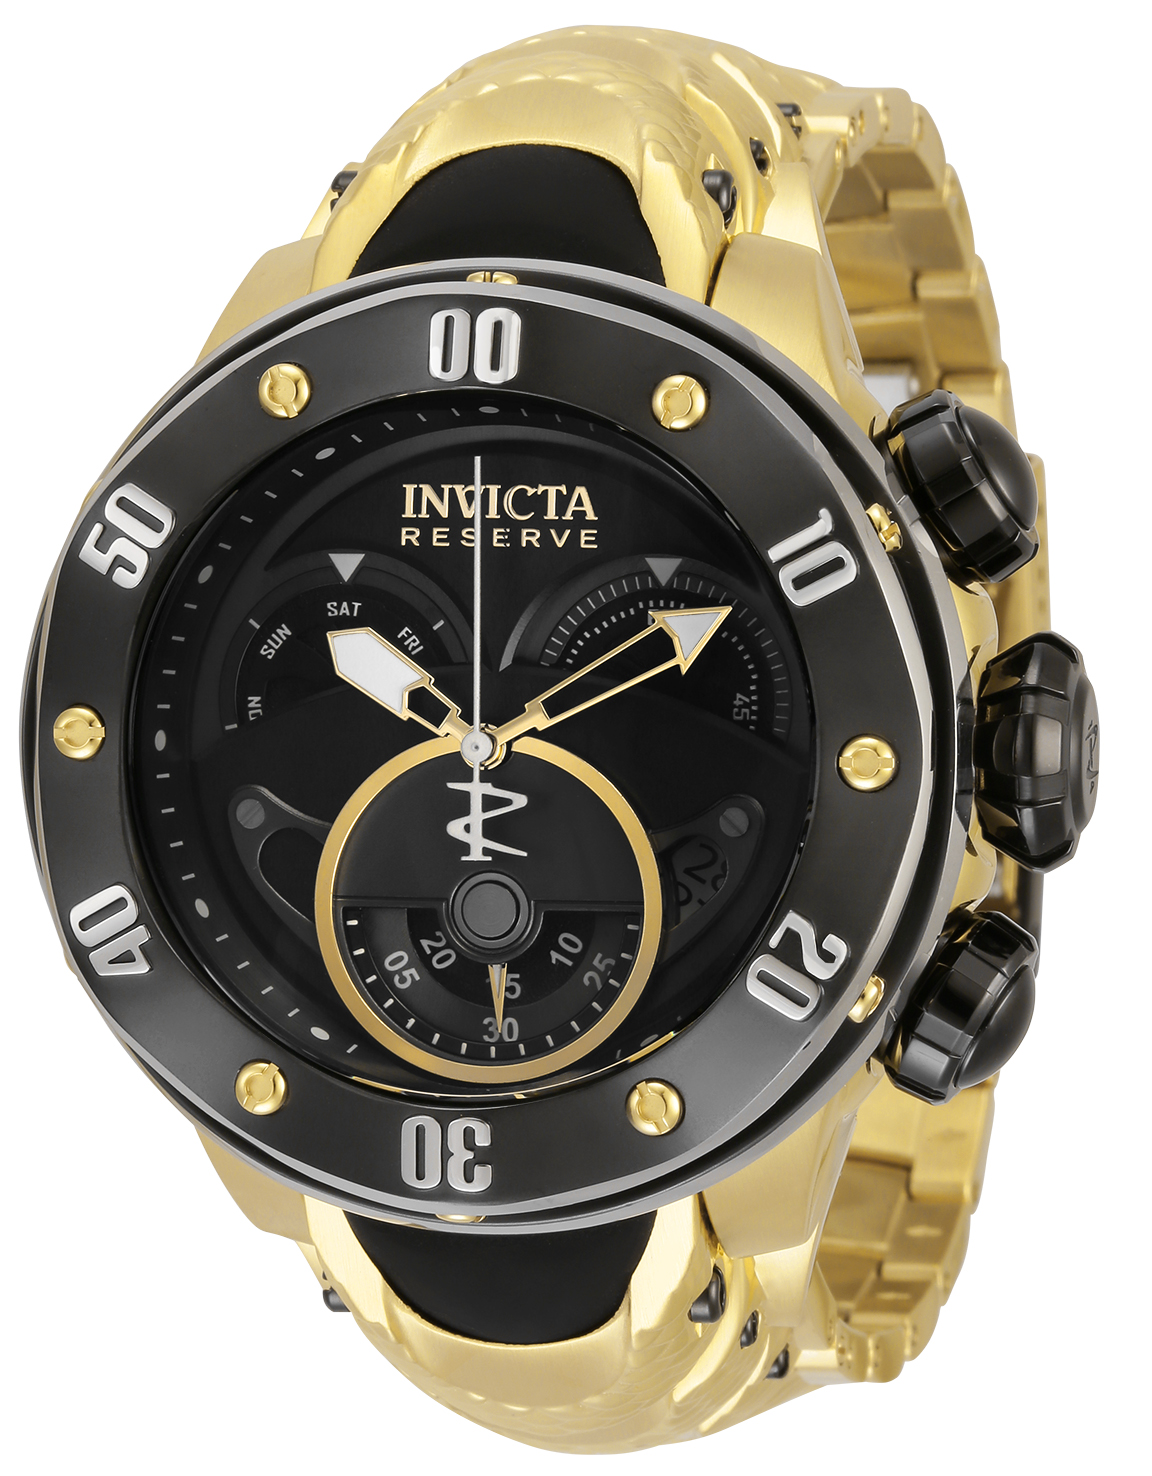 Invicta Reserve Men's Watch - 54mm, Gold, Black (33372)